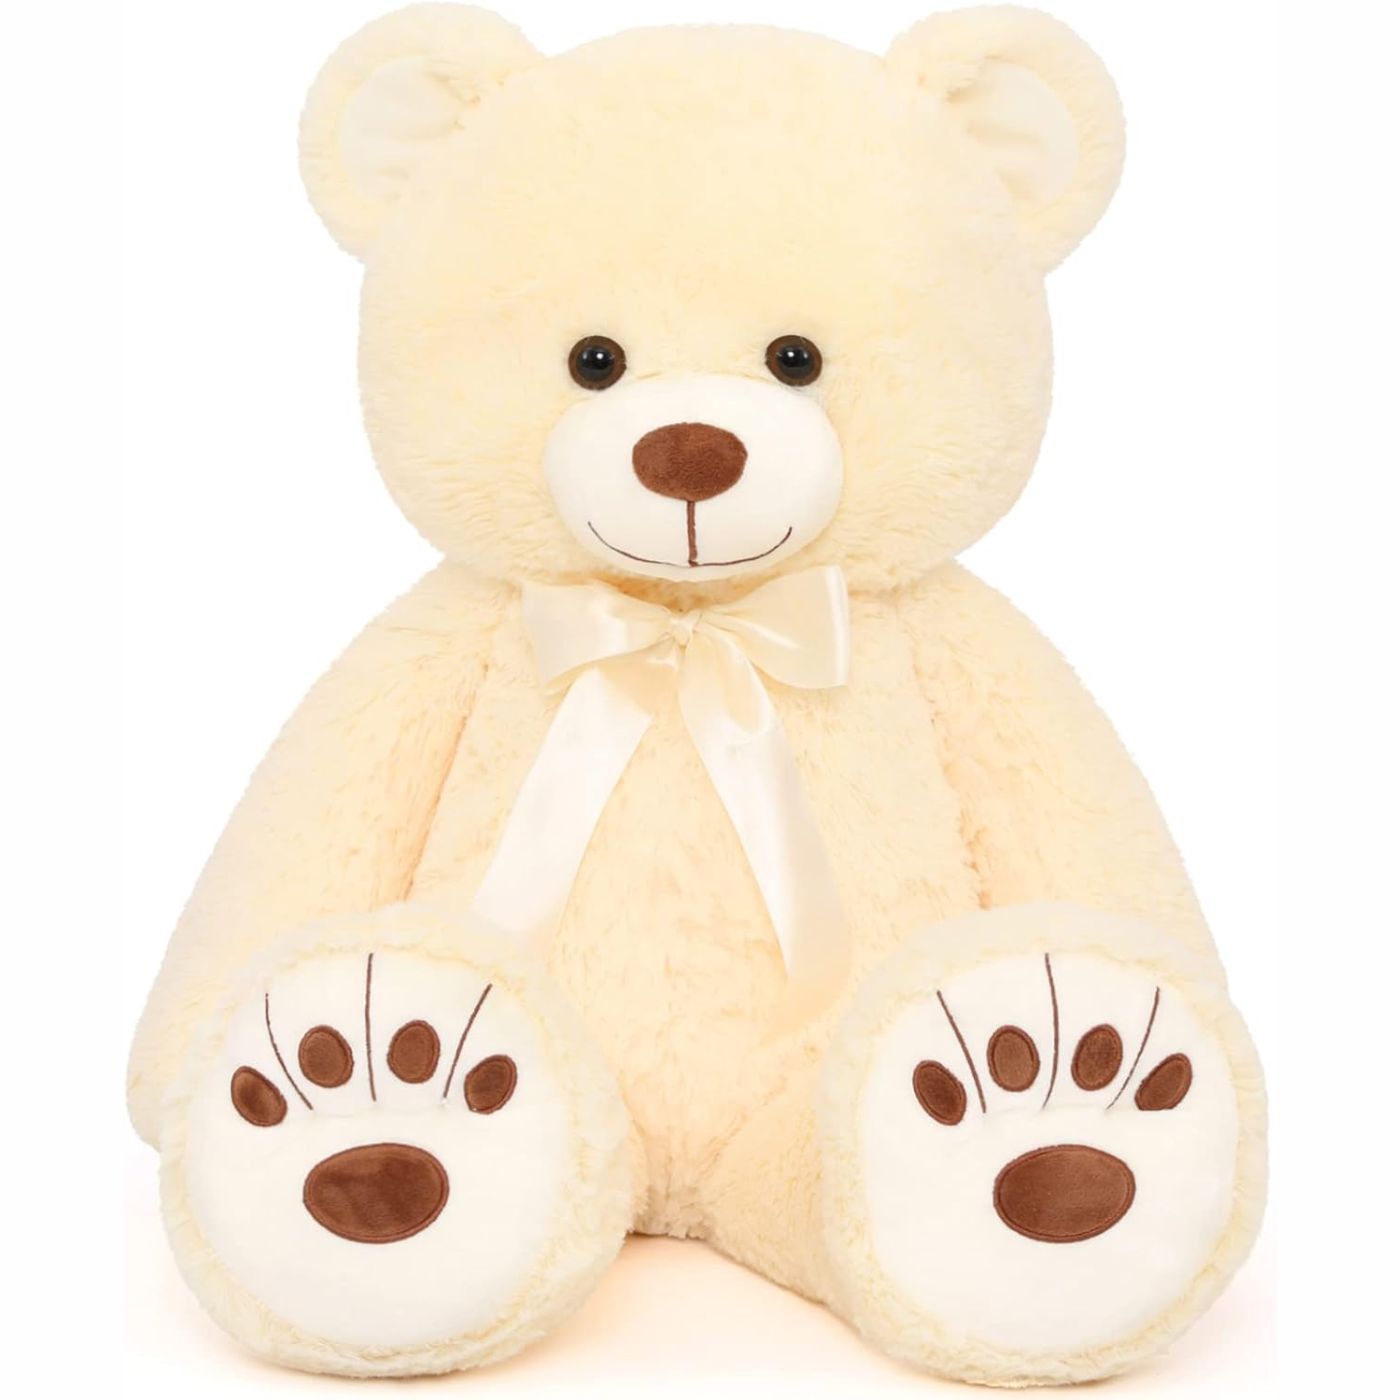 Riesiges Teddybär-Plüschtier, mehrfarbig, 36 Zoll